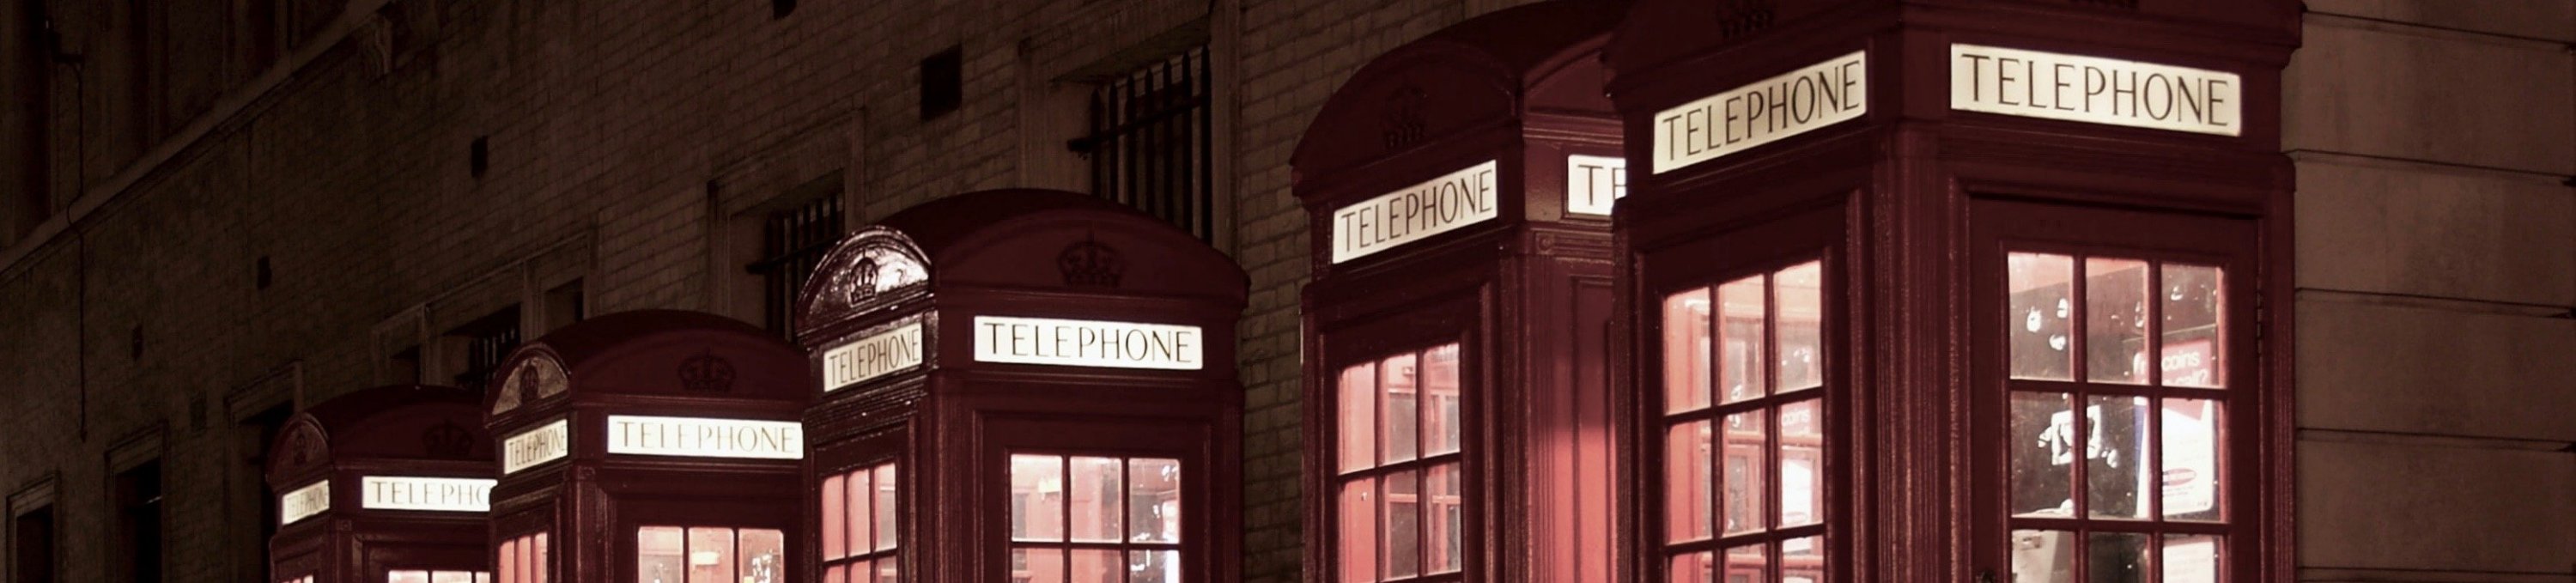 bw british phone booths (2).jpg